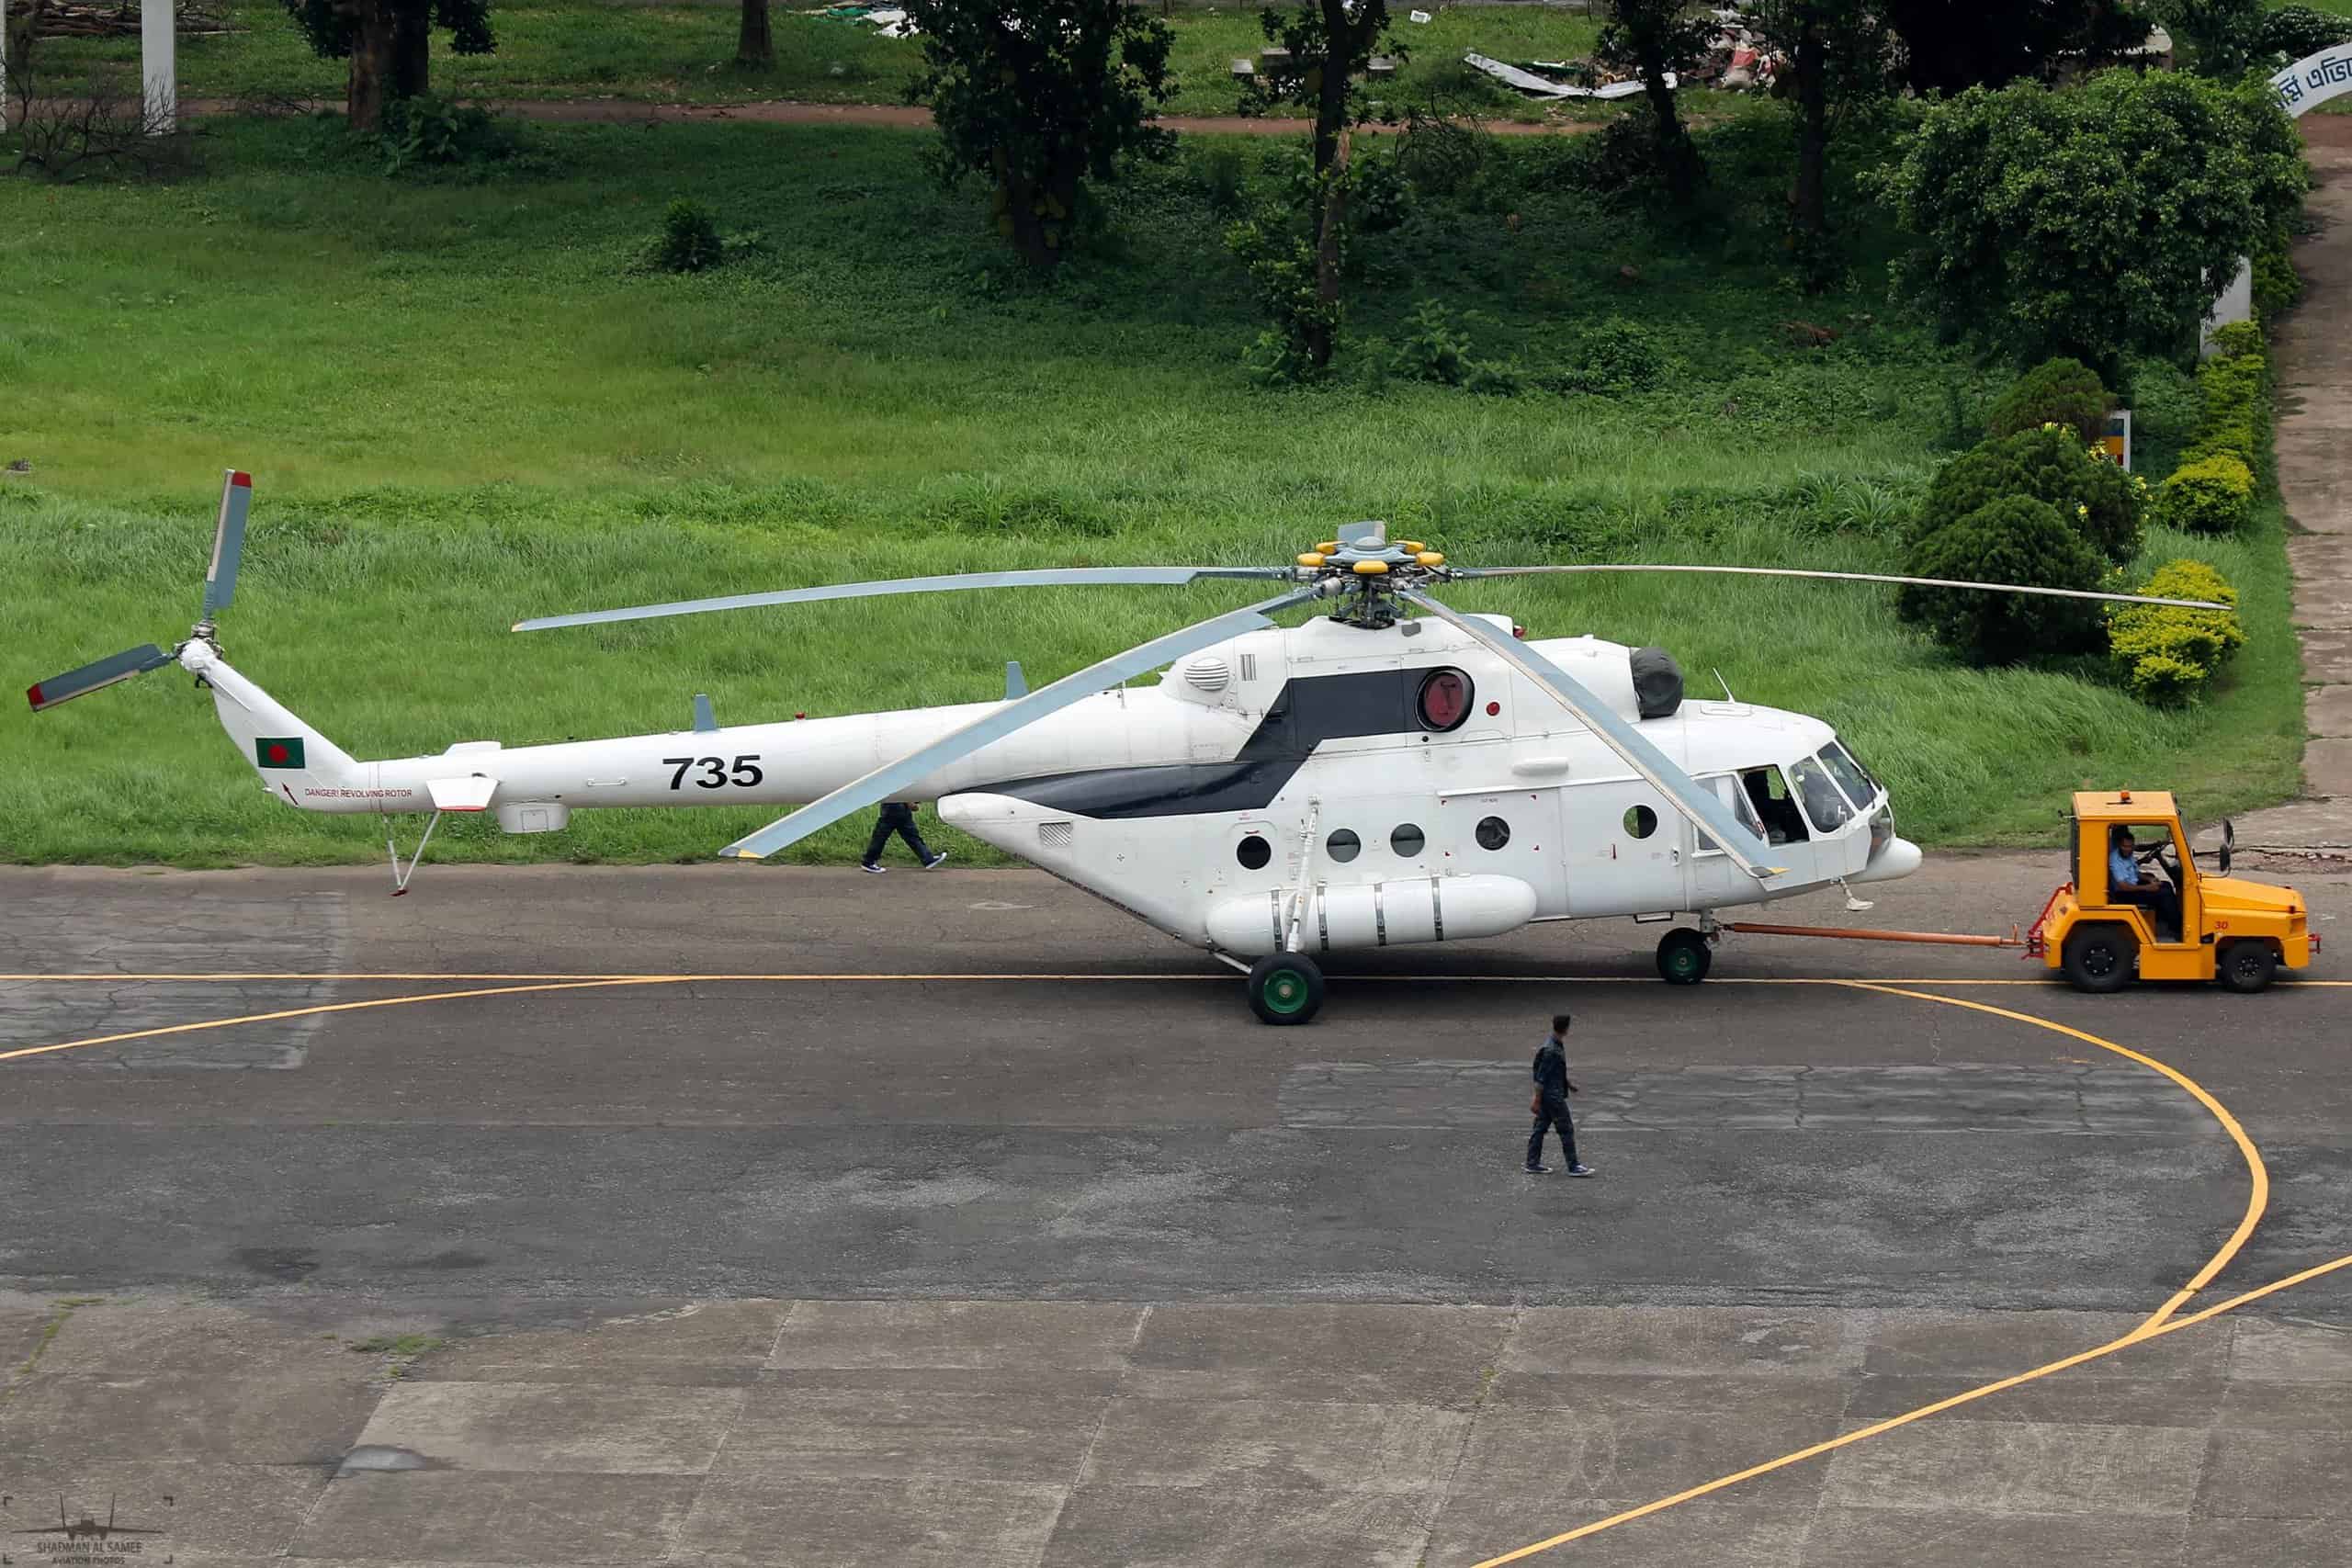 735 Bangladesh Air Force Mil Mi-171 Hip. (41836905645) by Shadman Samee from Dhaka, Bangladesh